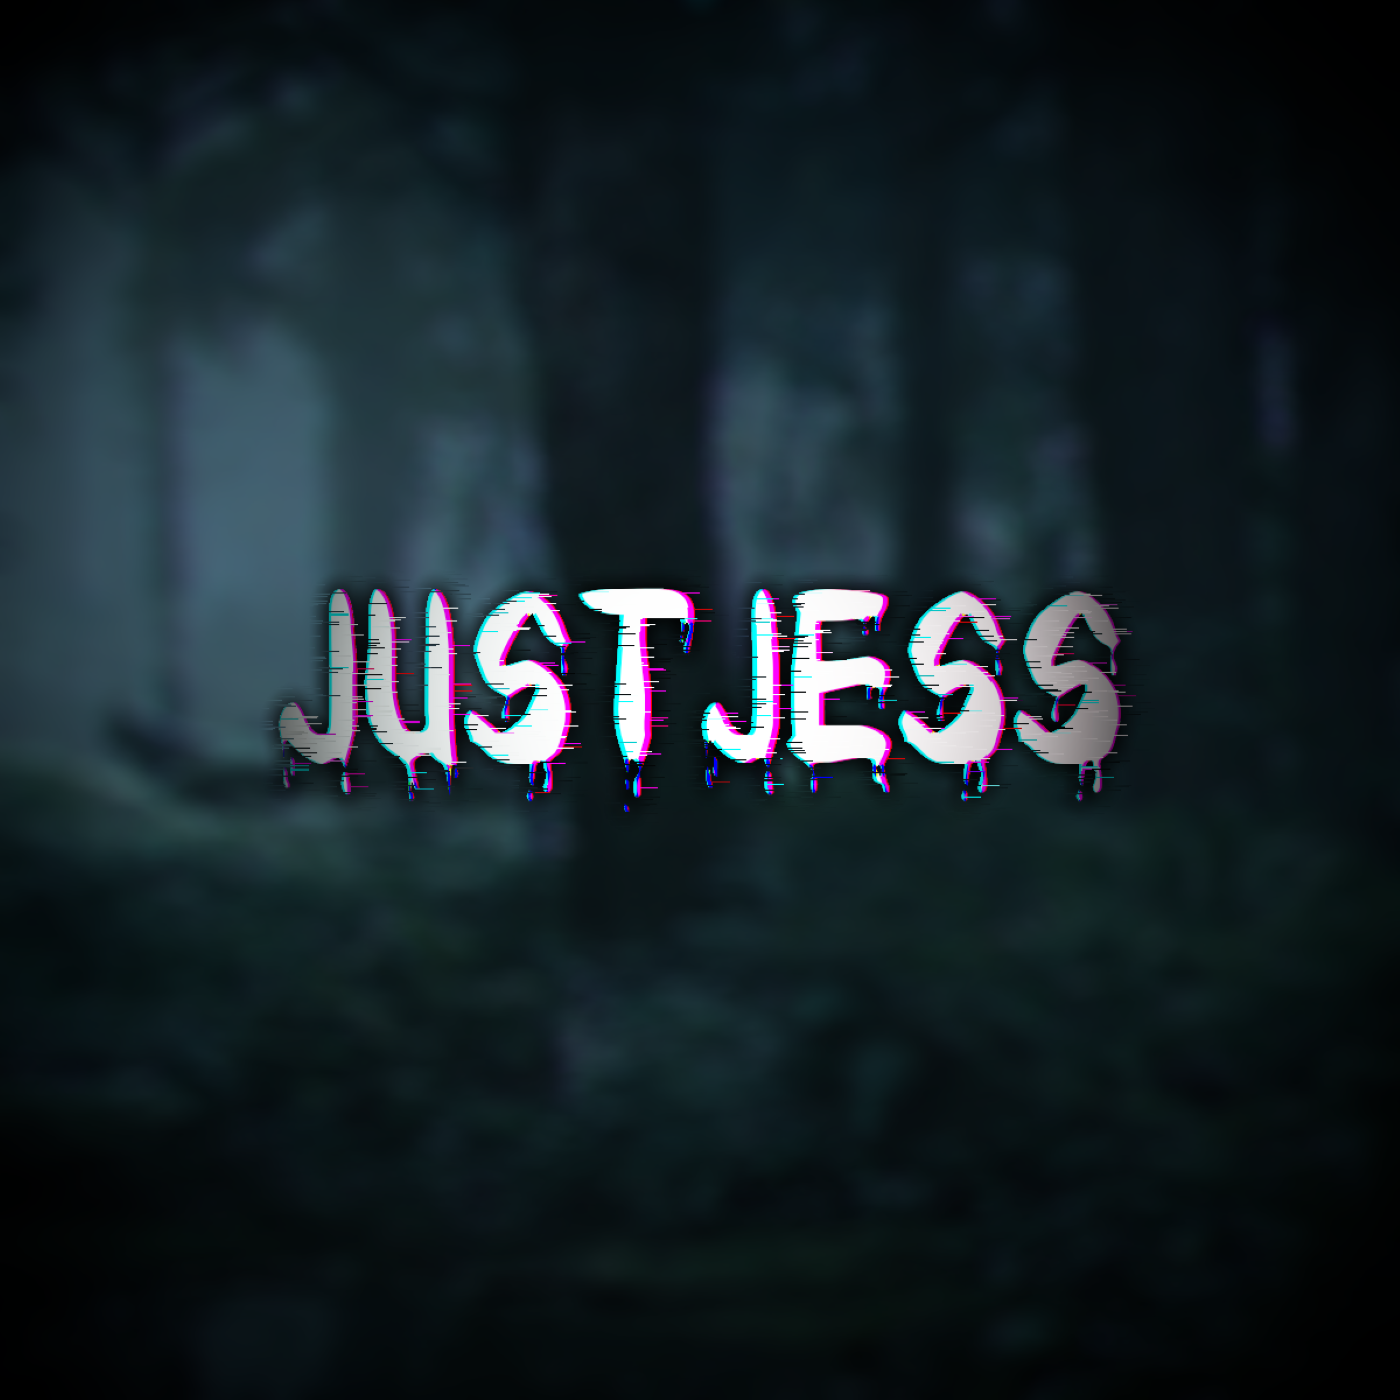 JustJess